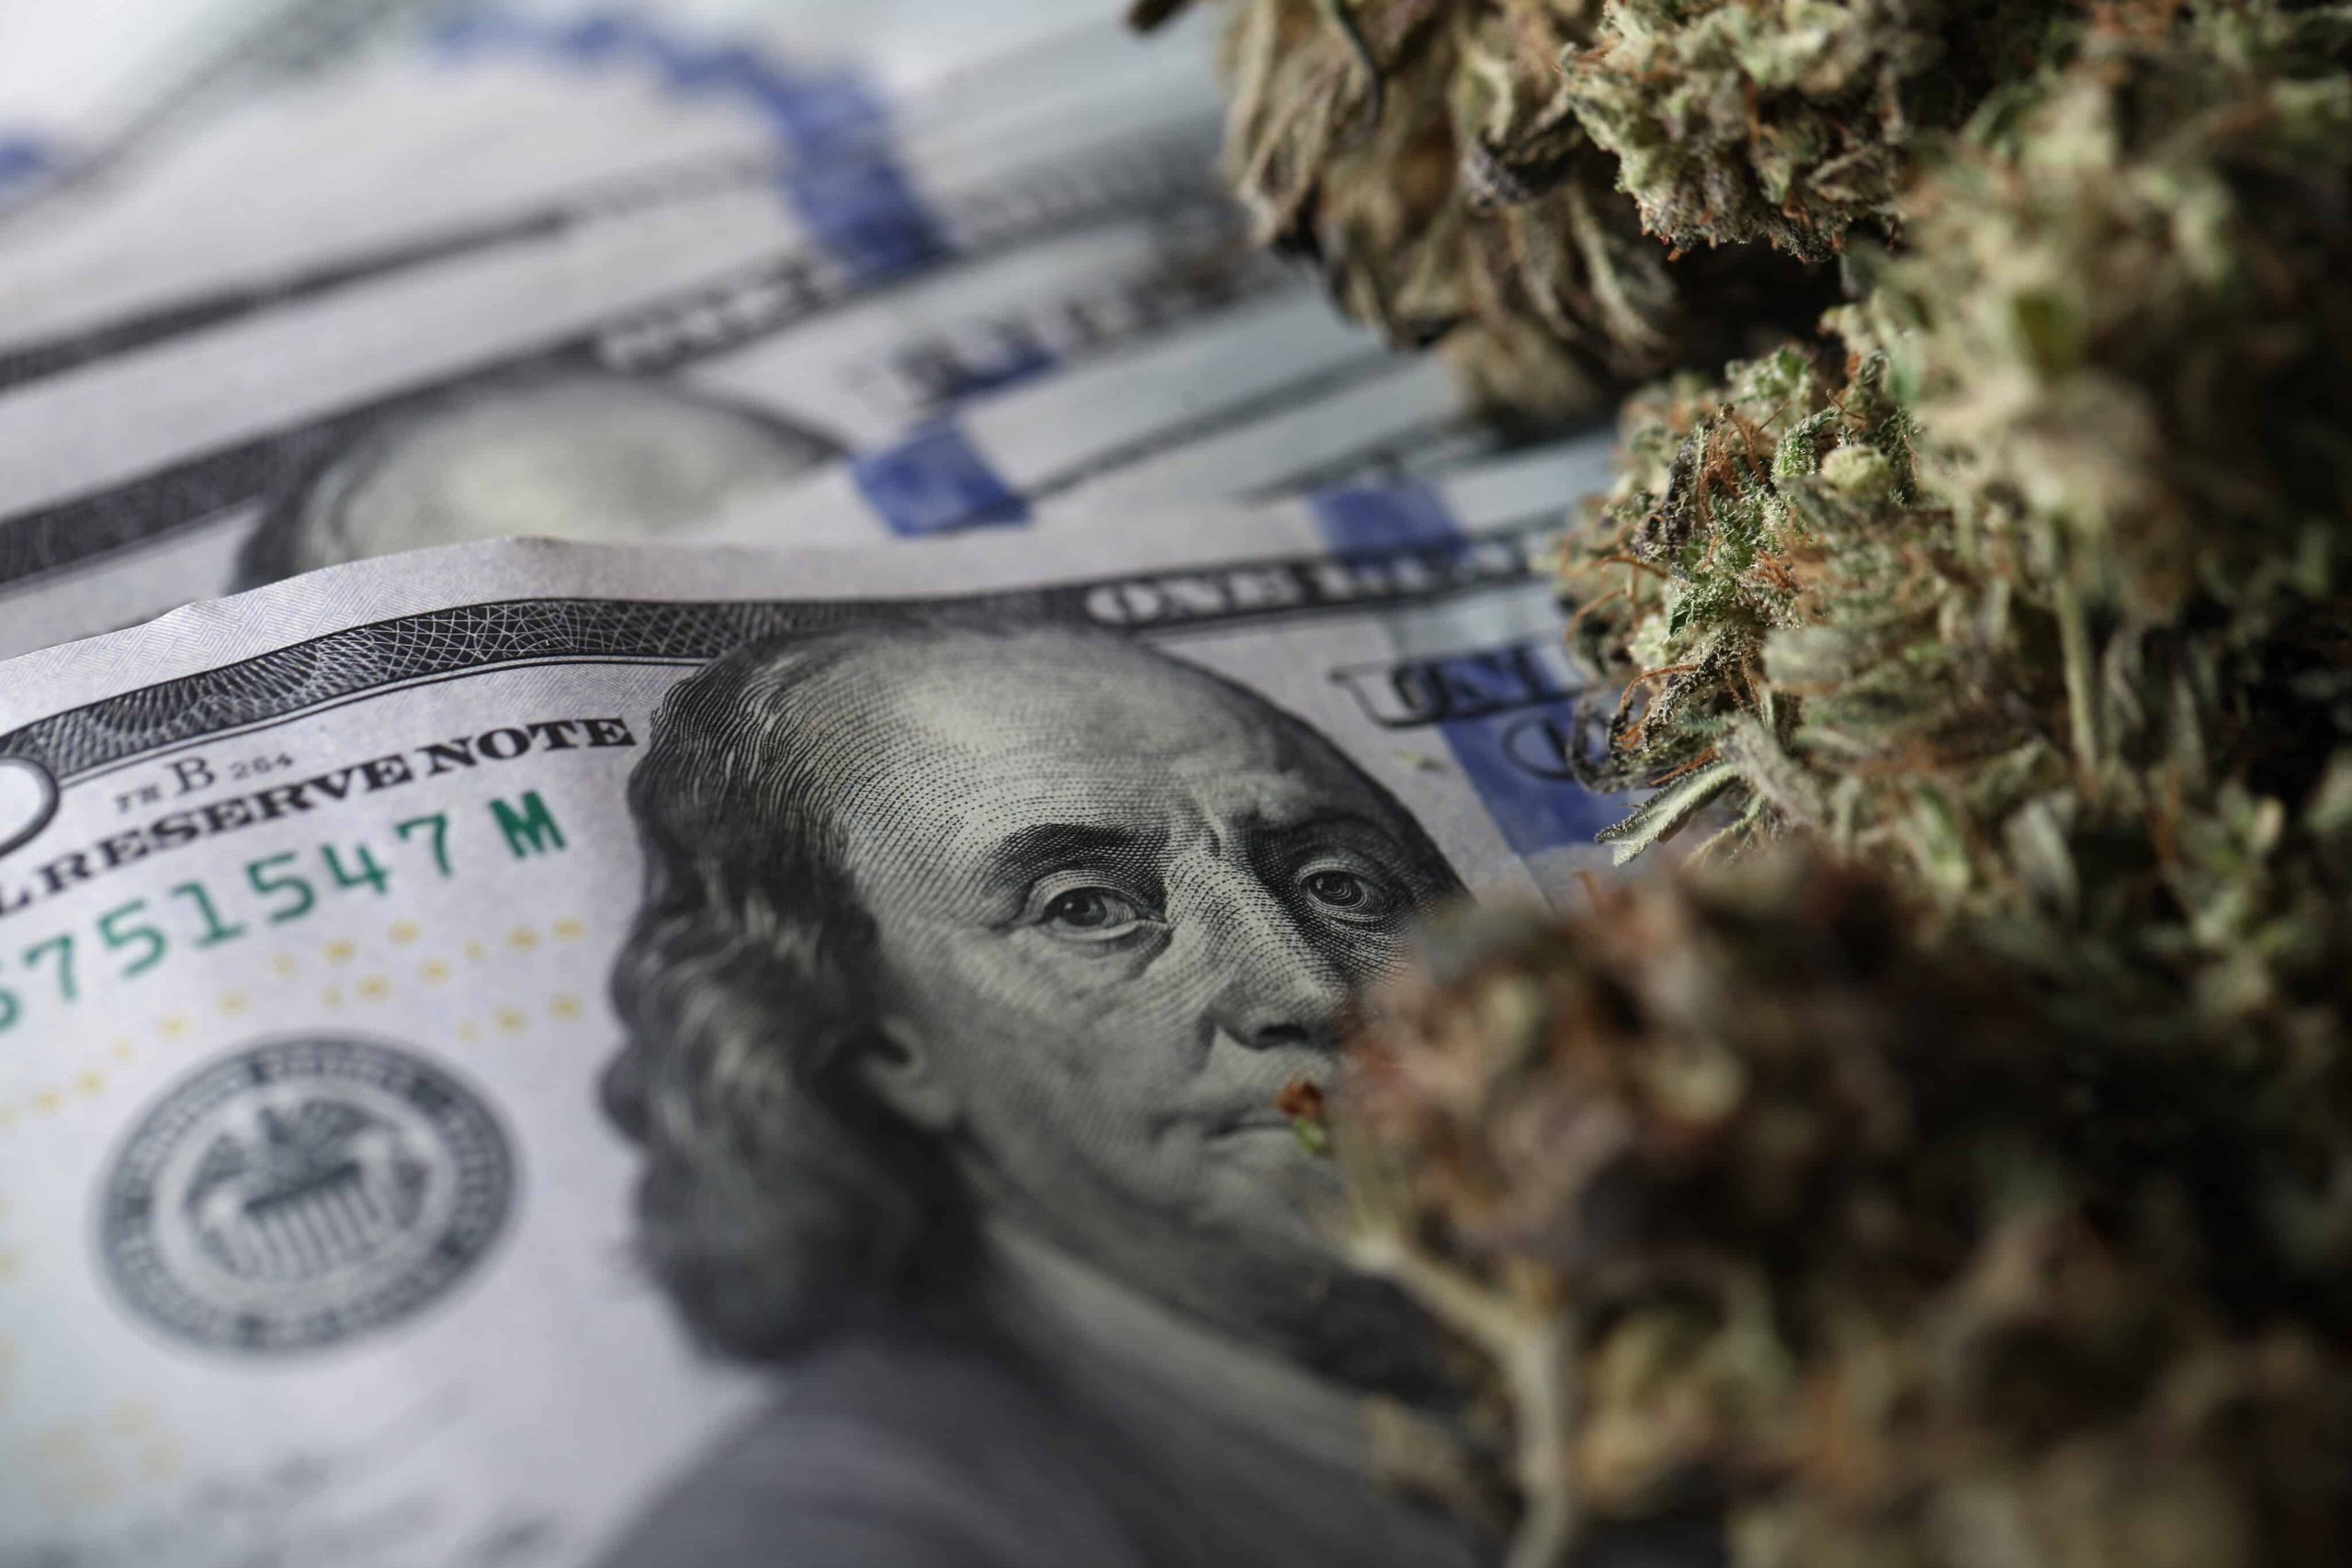 Maryland Lawmakers Pass Recreational Marijuana Sales Bill